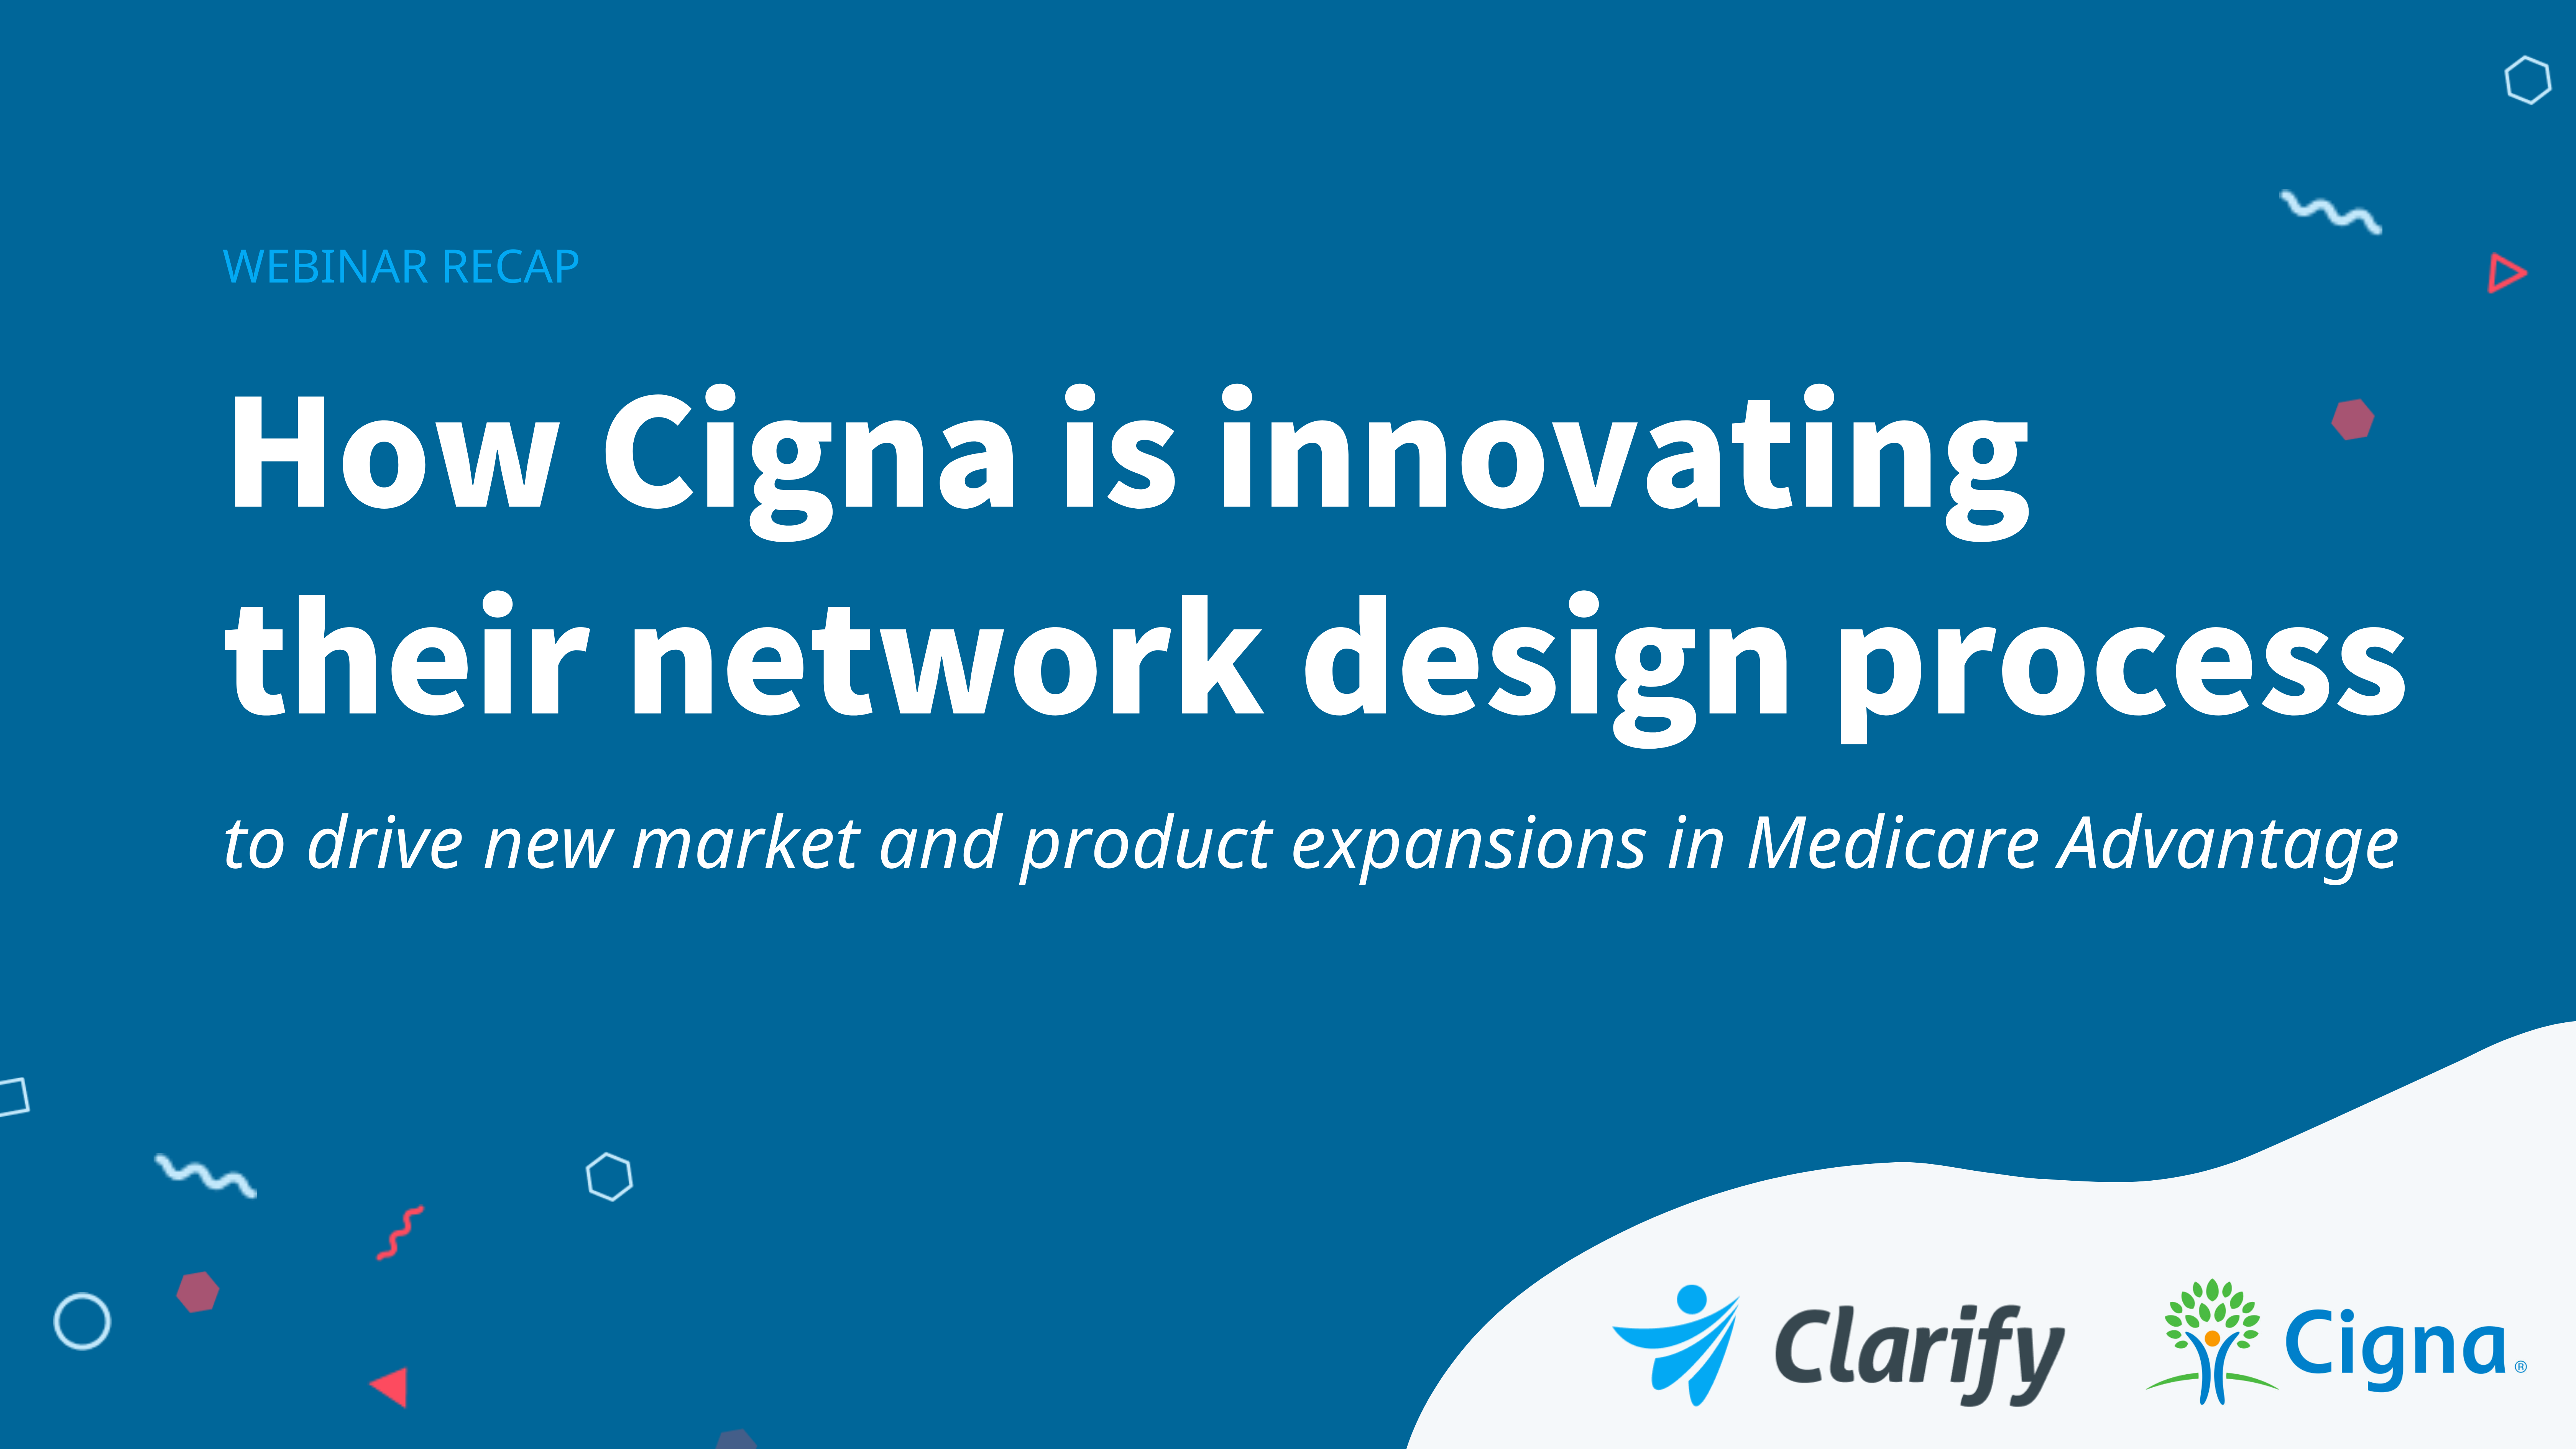 Cigna Medicare Advantage Network expansion webinar recap blog post